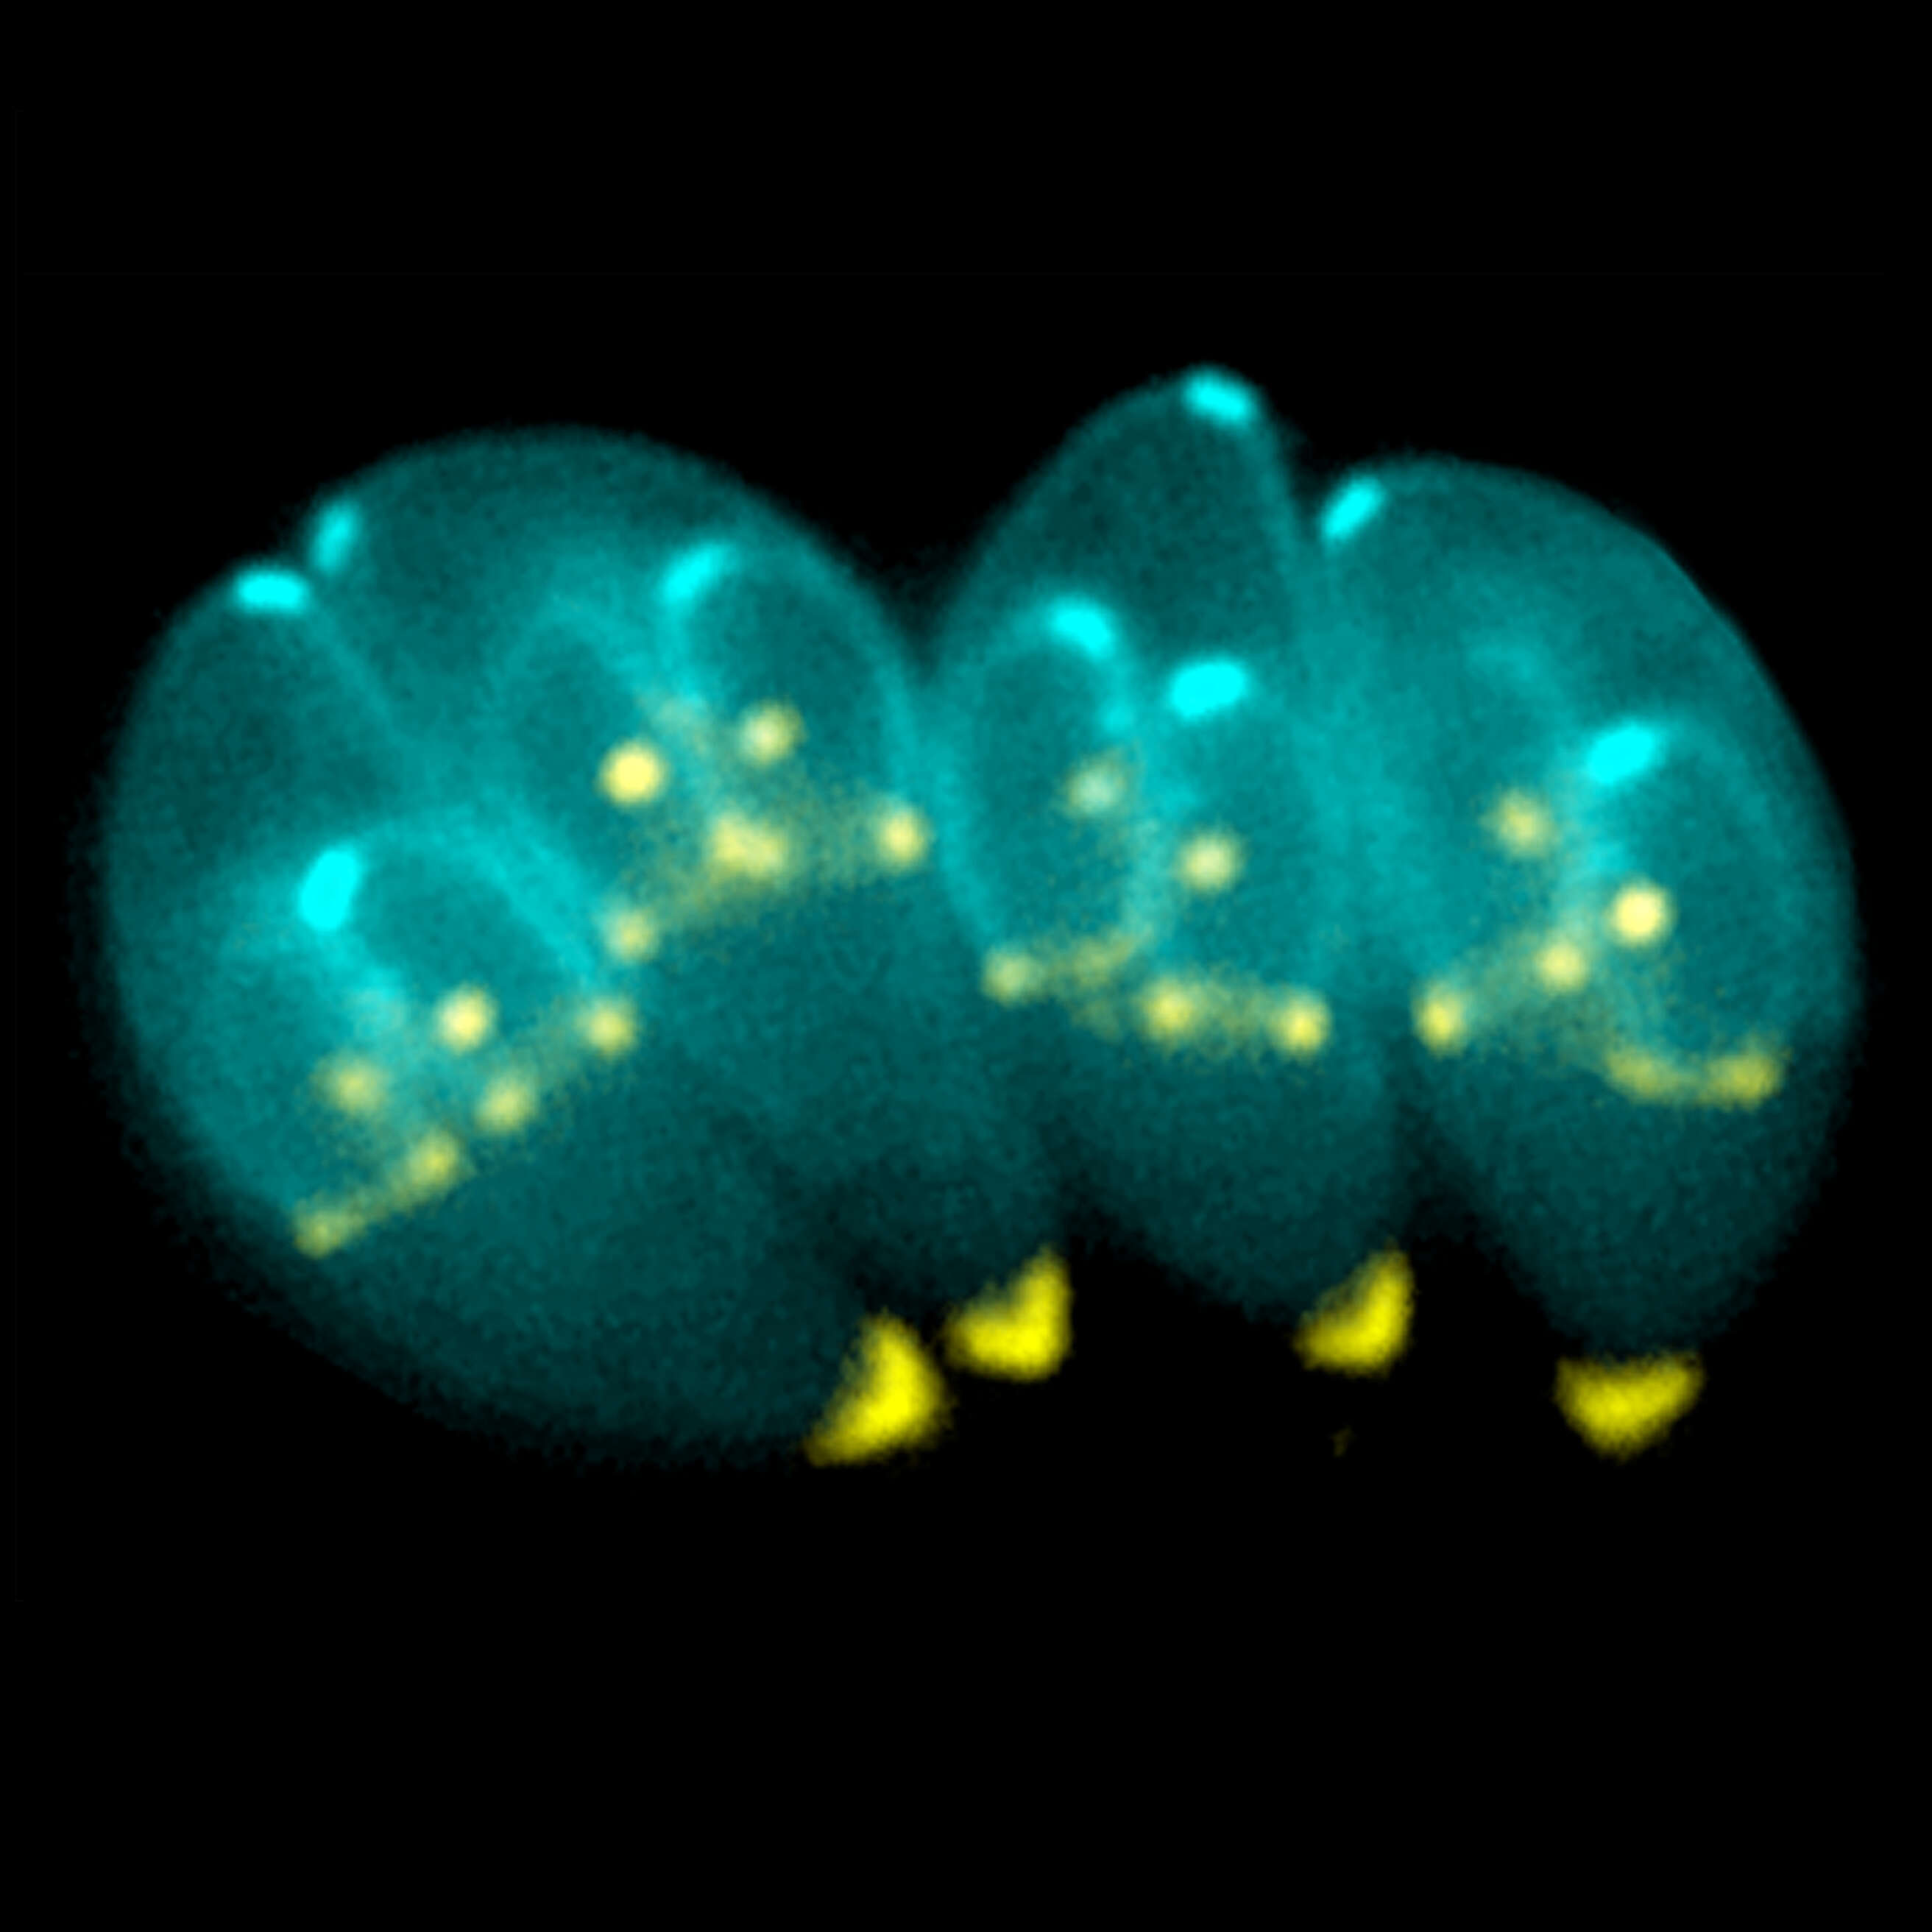 Image of Toxoplasma